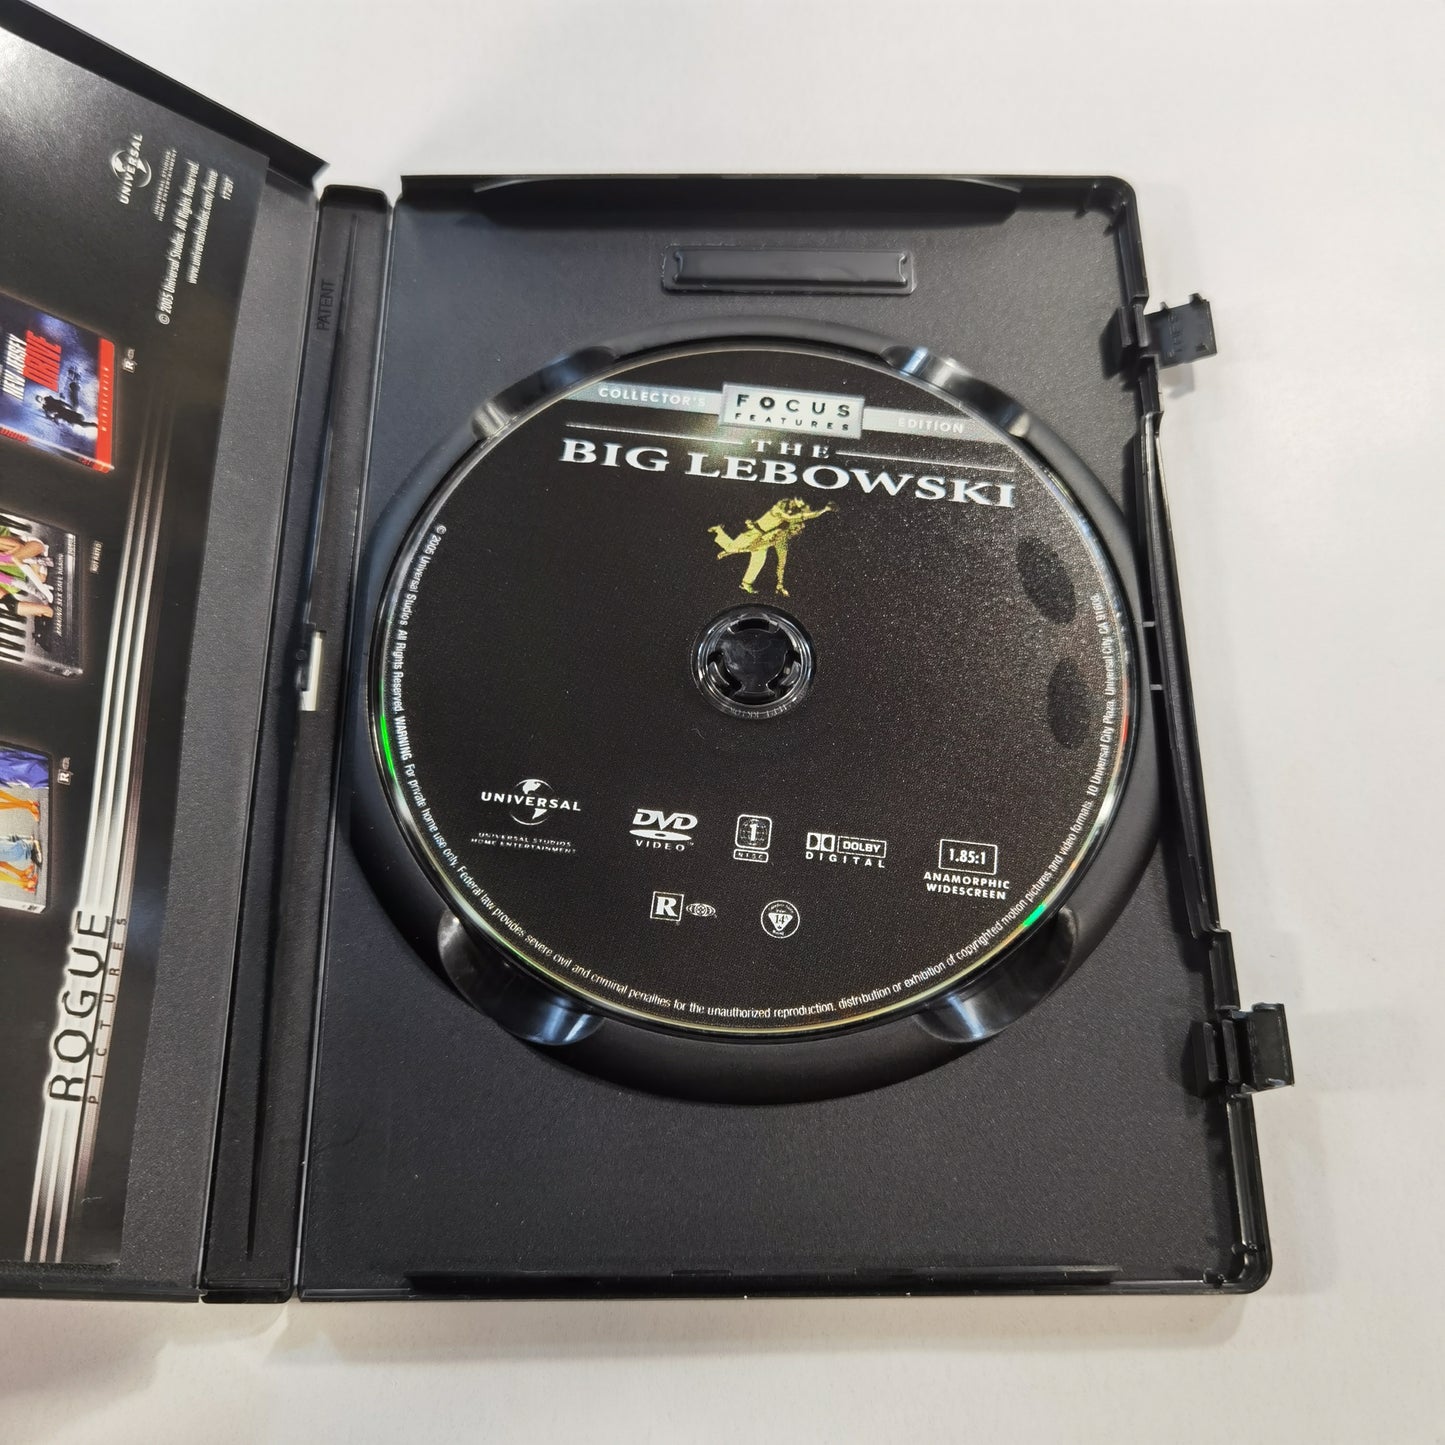 The Big Lebowski (1998) - DVD US 2005 Collector's Edition